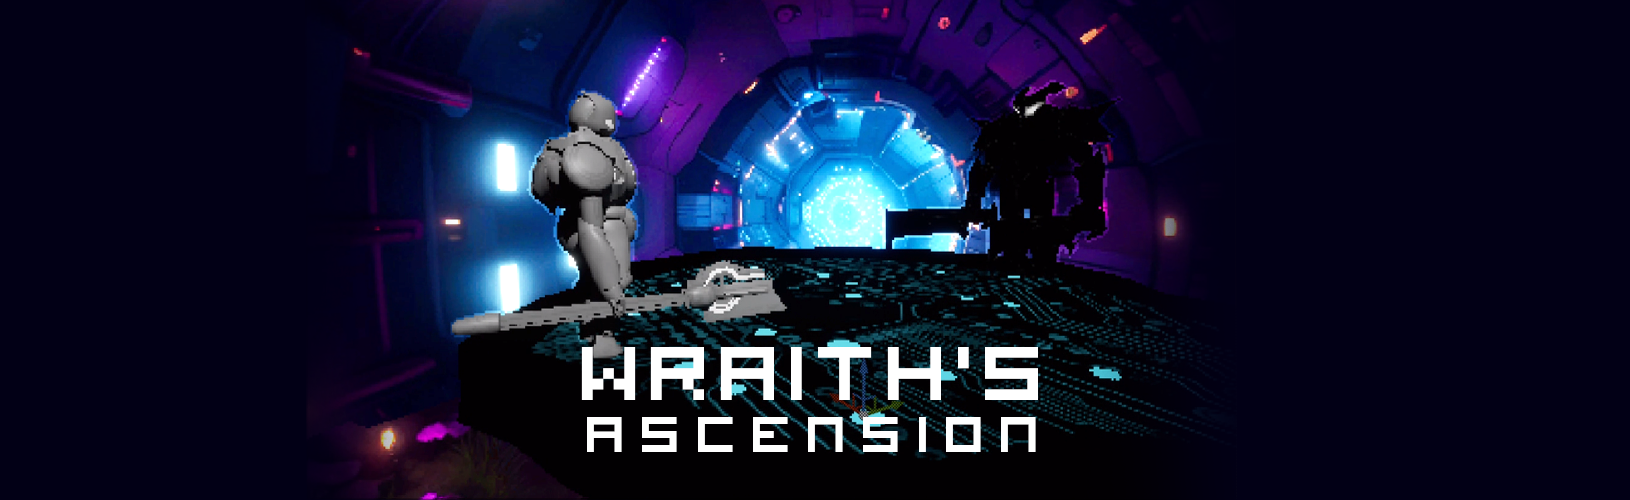 Wraith's Ascension